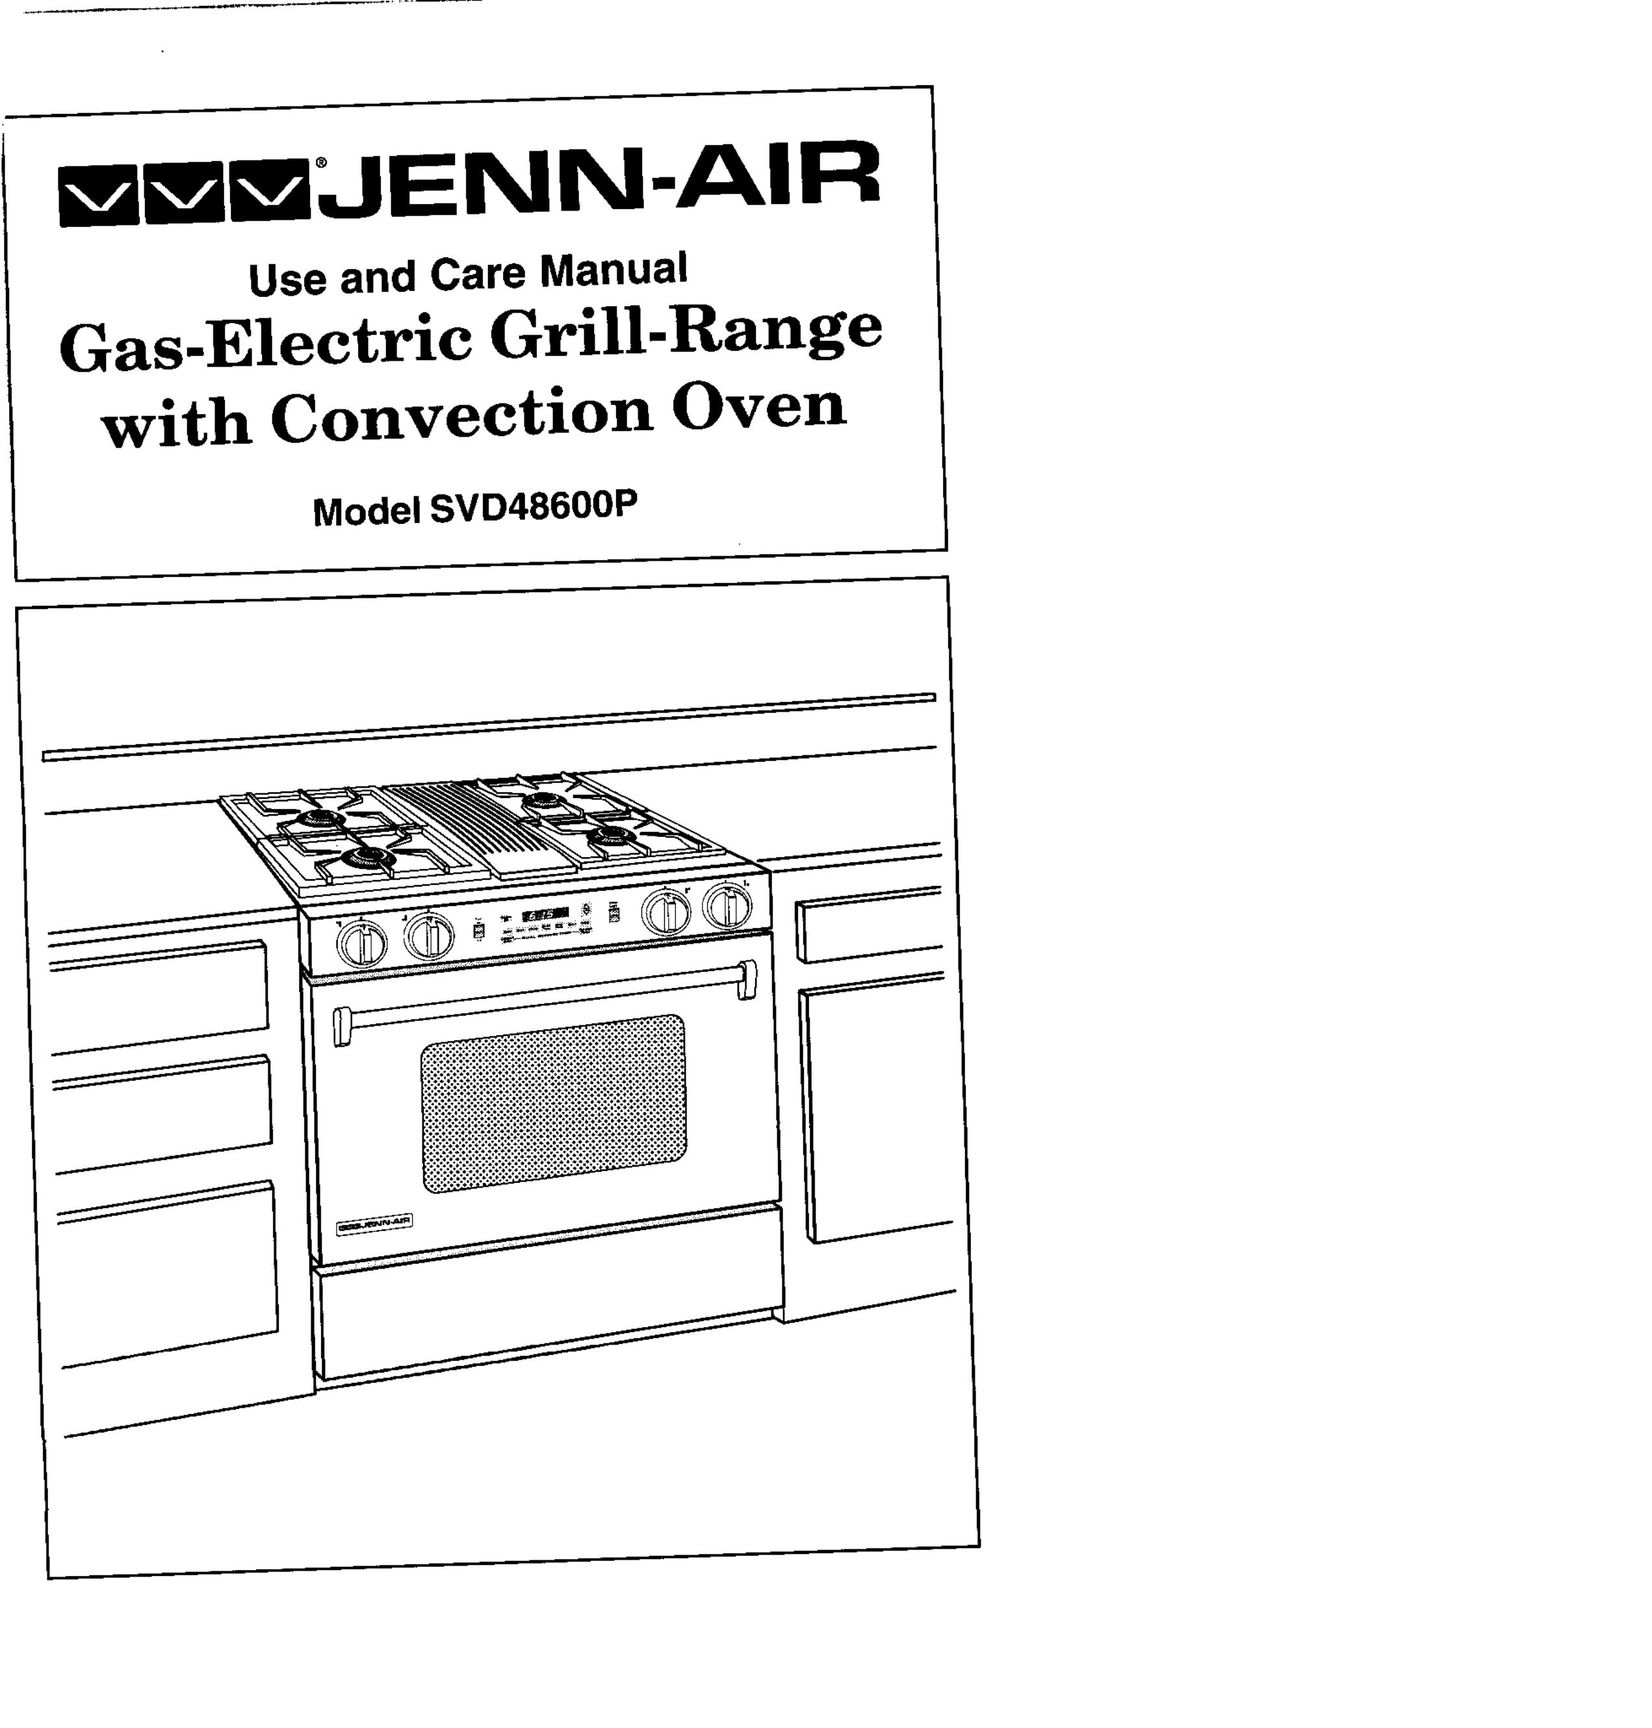 Jenn-Air SDV48600P Convection Oven User Manual